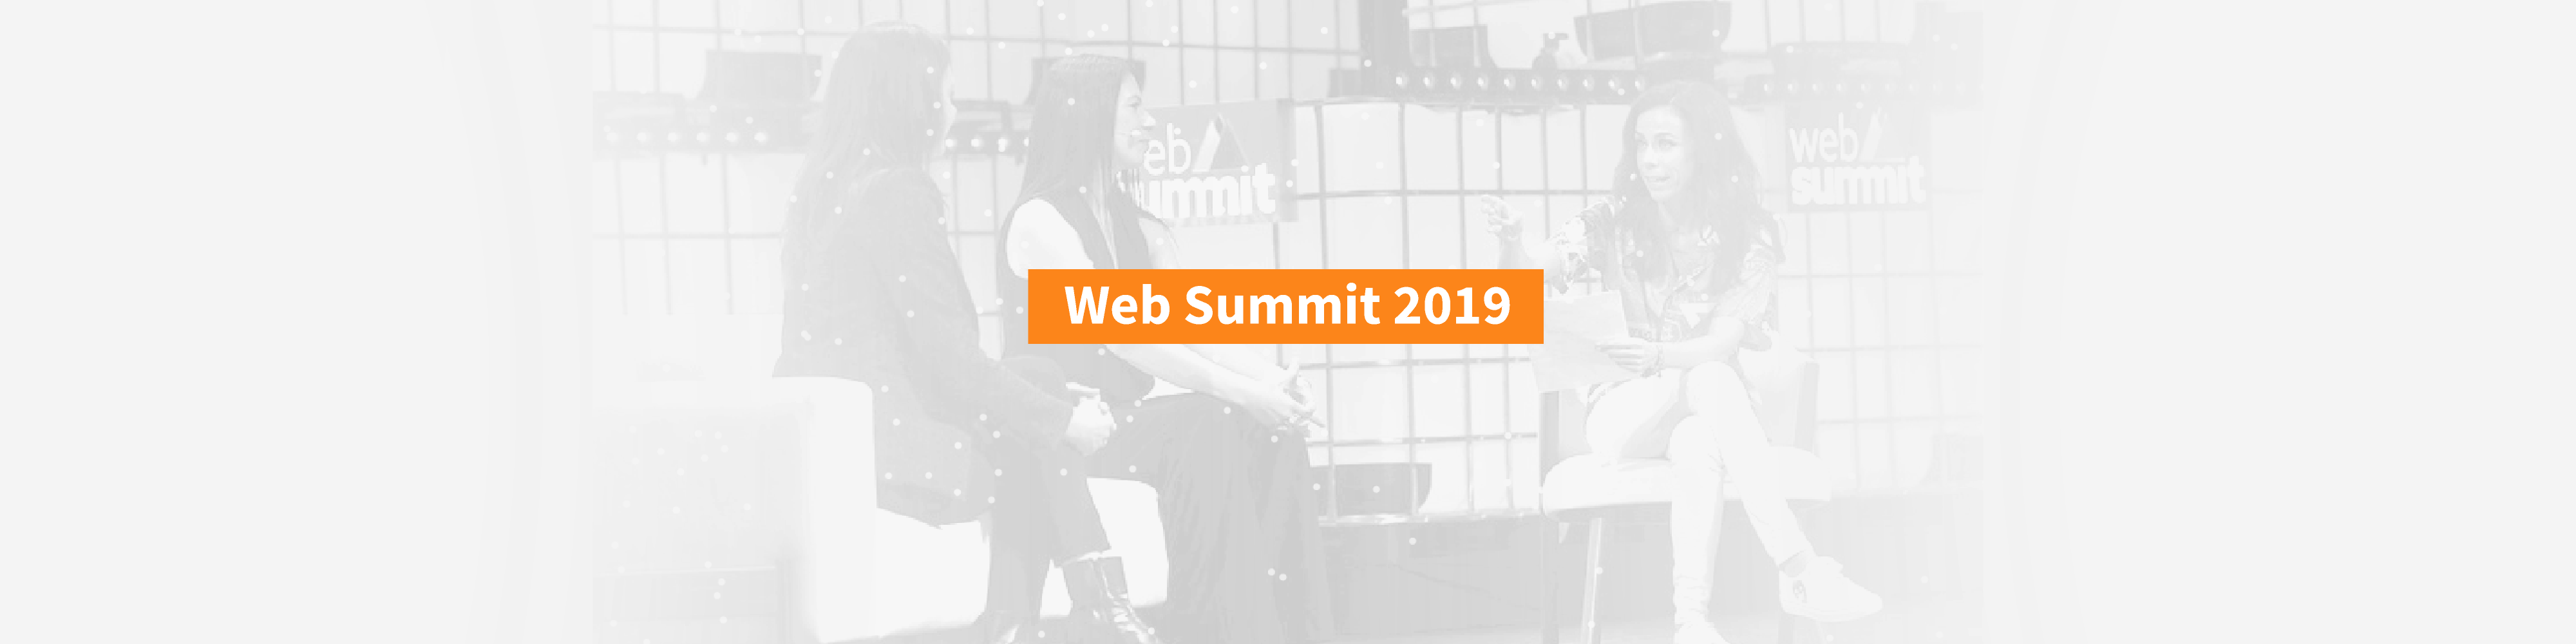 Web summit 2019